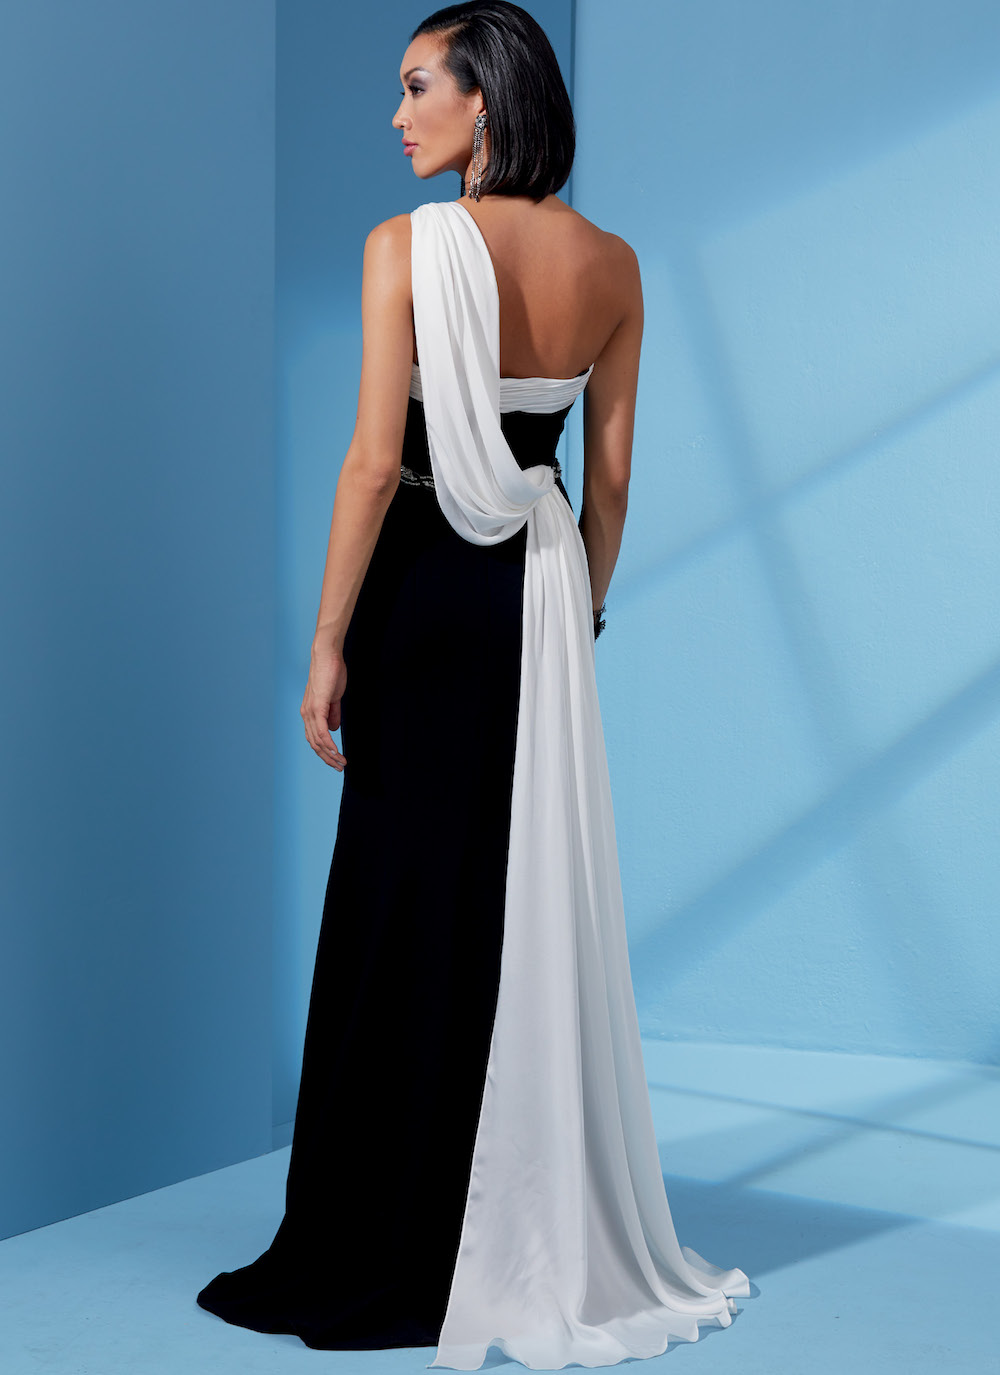 Vogue® Patterns Papierschnittmuster Damen Abendkleid V1616